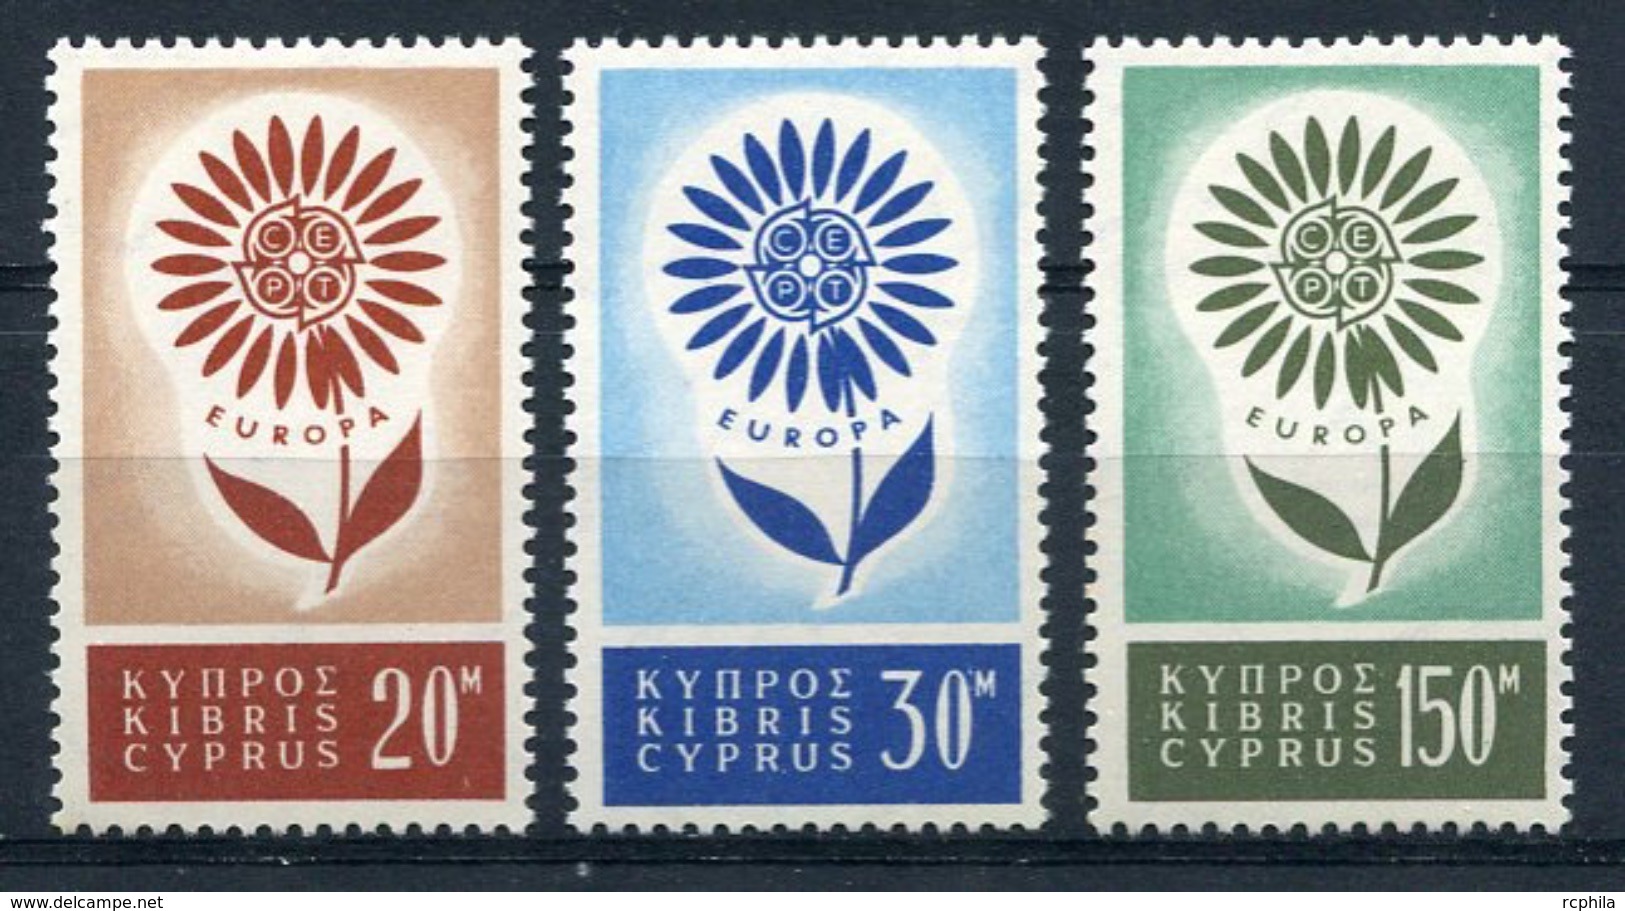 RC 8021 CHYPRE CYPRUS 232 / 234 - SERIE EUROPA 1964 COMPLÈTE COTE 60€ NEUF ** TB - Zypern (...-1960)